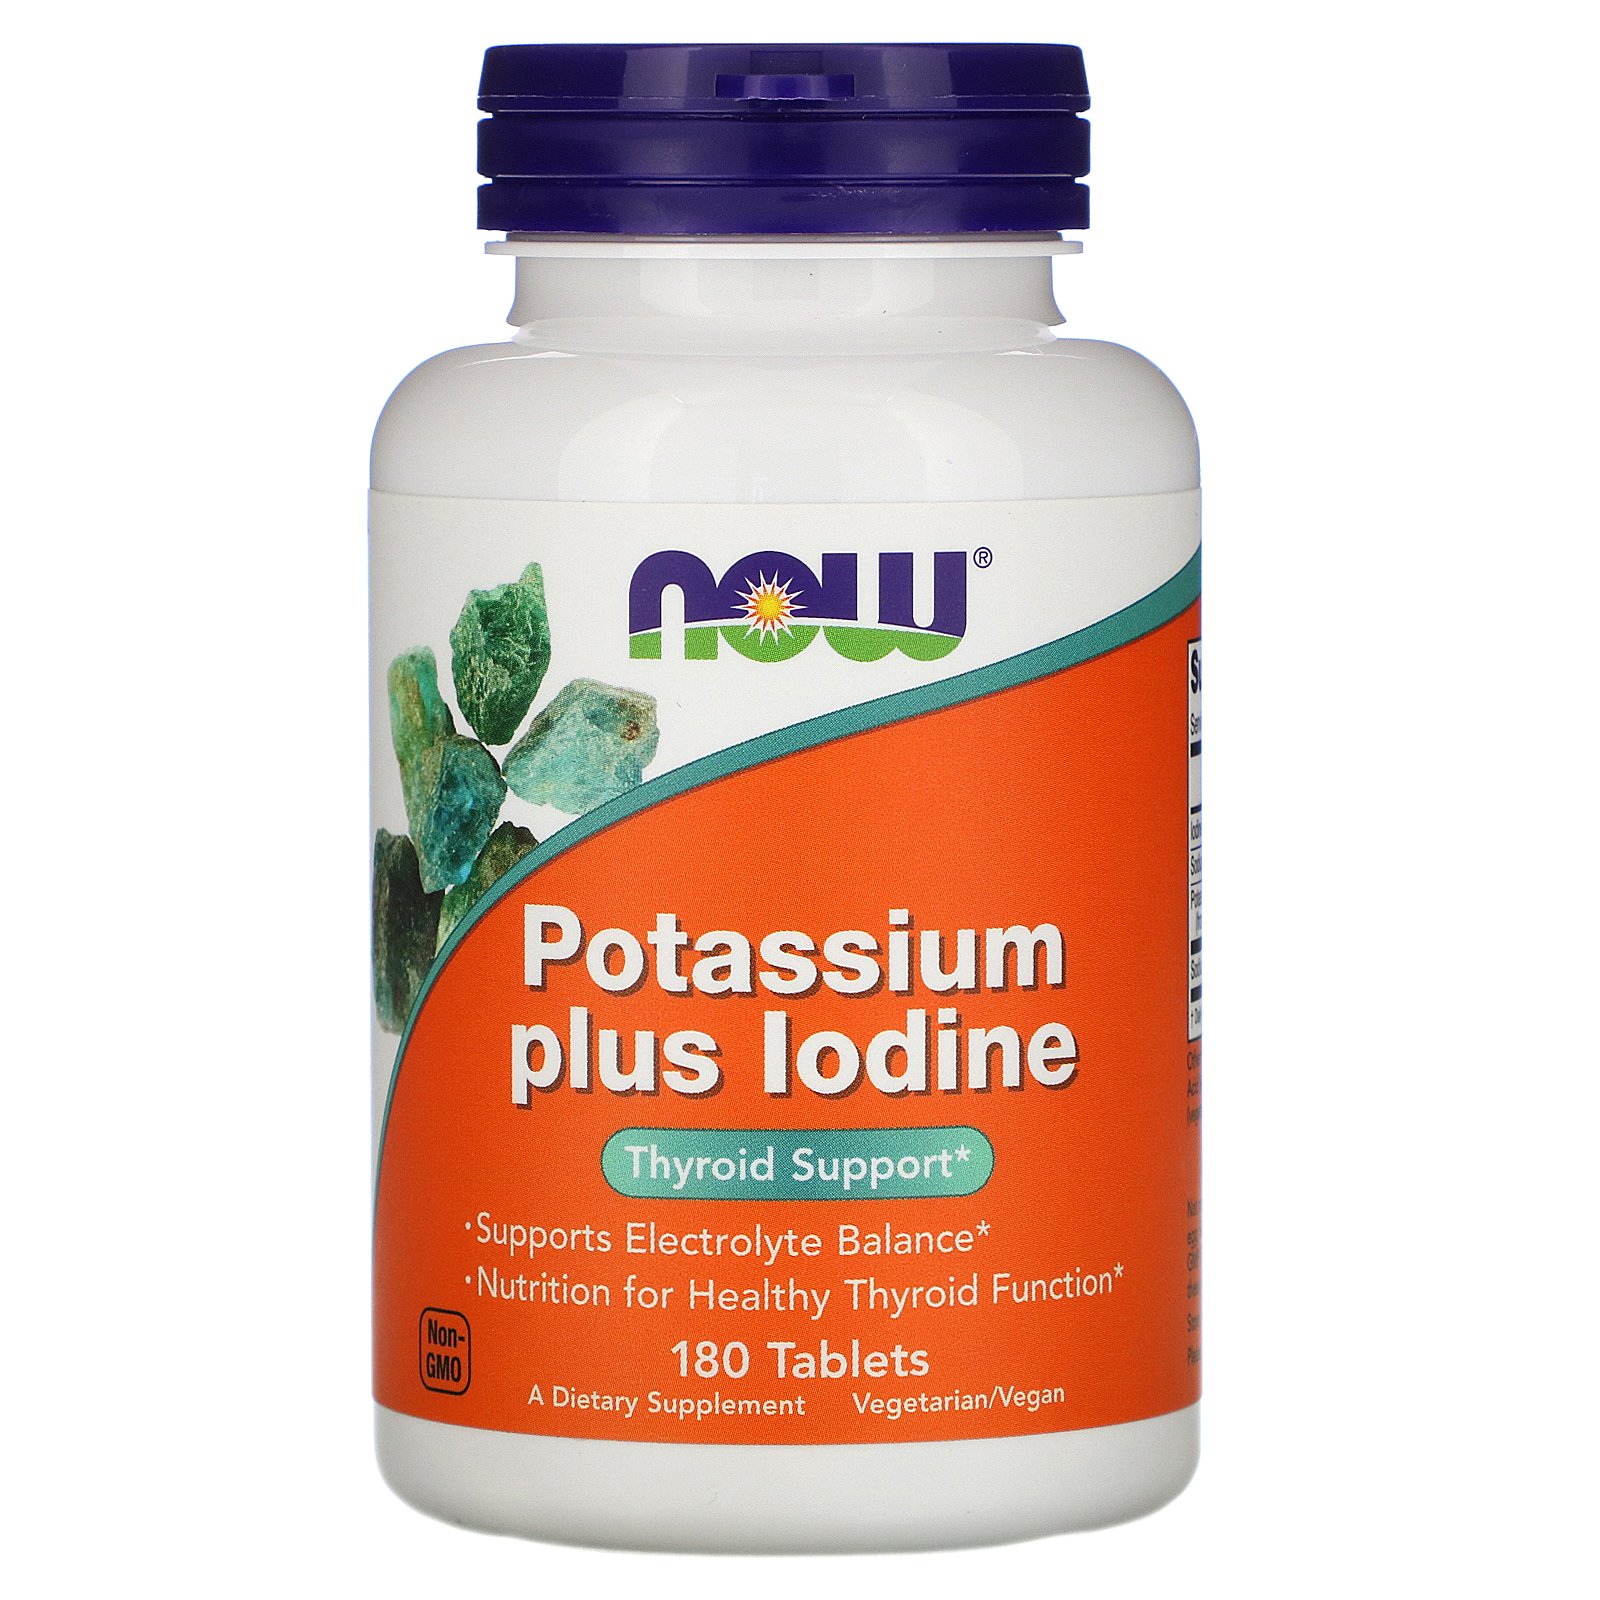 Potassium + Iodine, Калий 99 мг + Йод 225 мкг - 180 таблеток